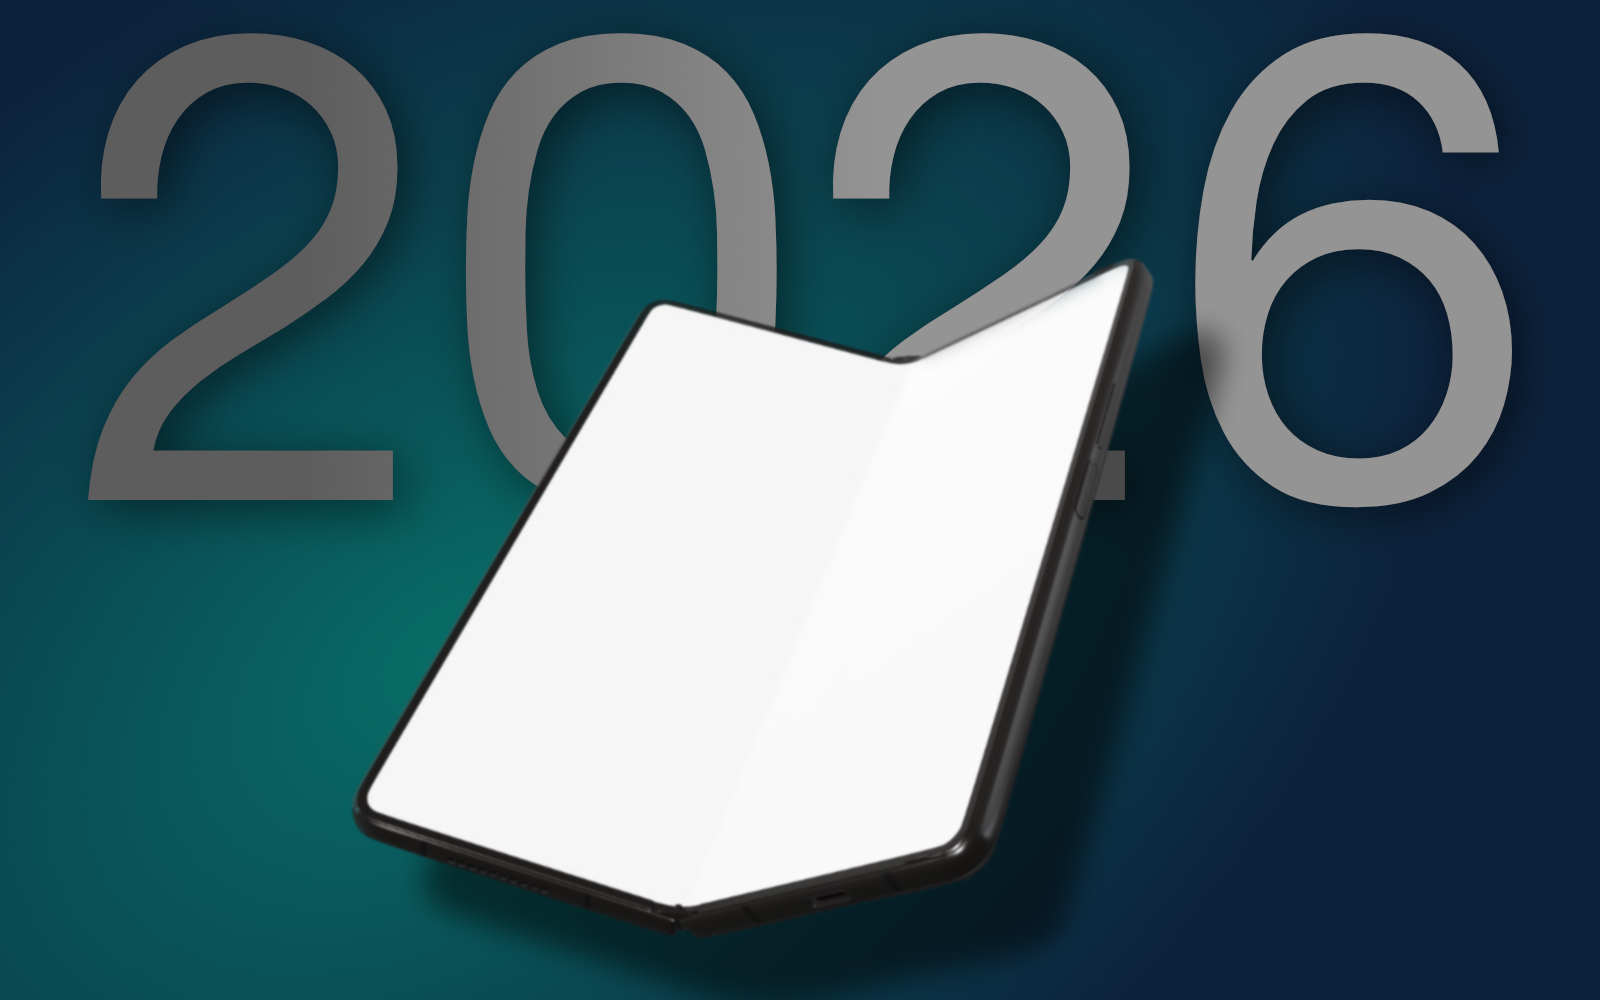 foldable-device-in-2026.jpg